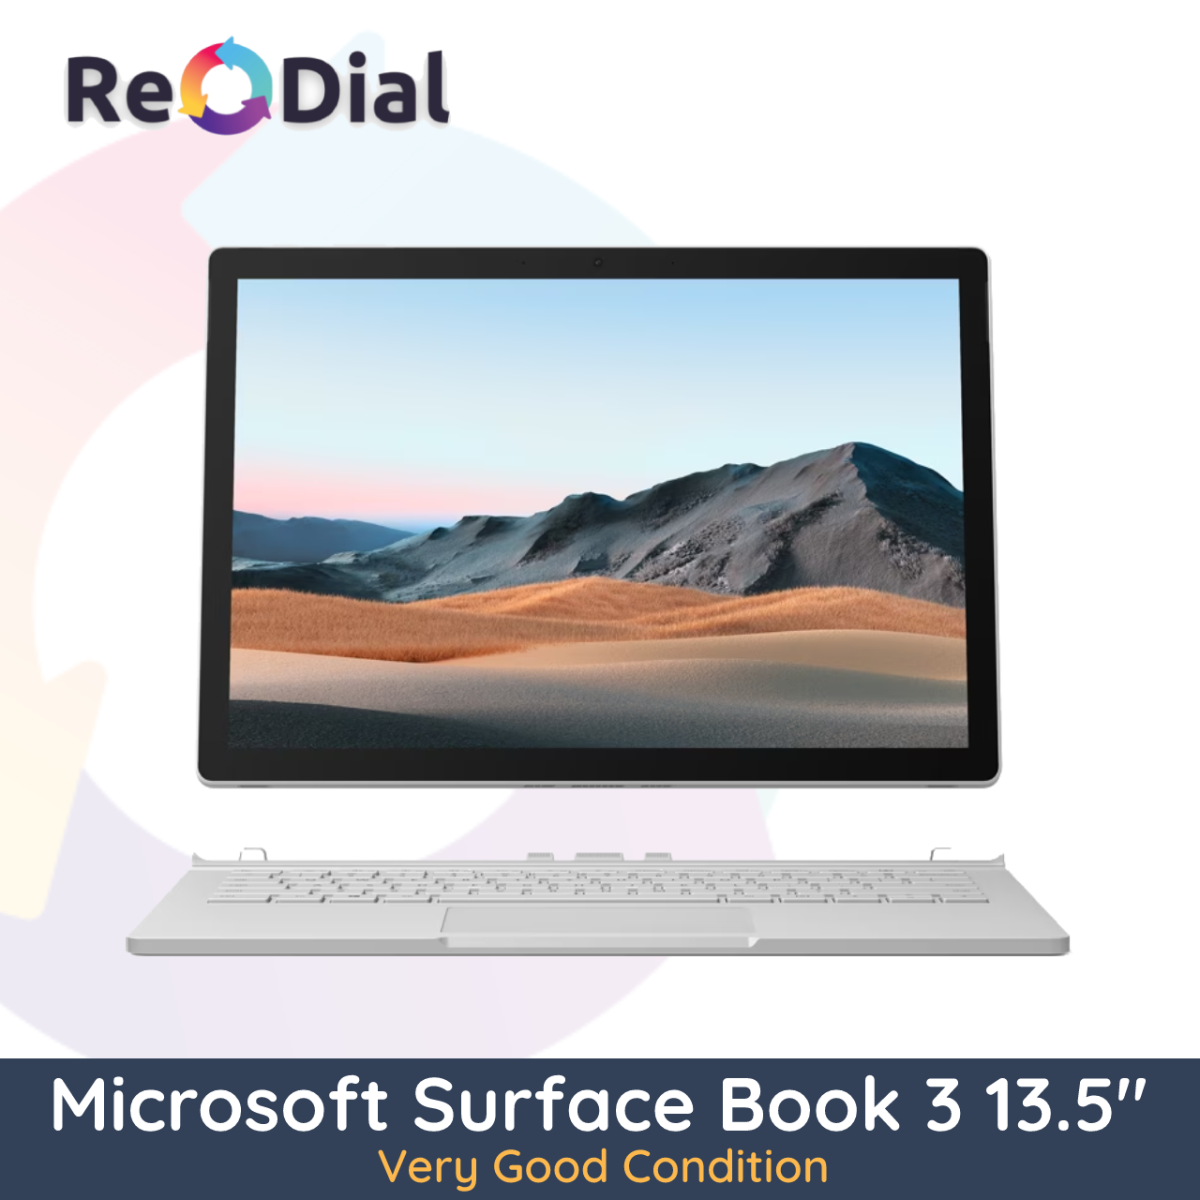 Microsoft Surface Book 3 13.5" i7-1065G7 256Gb 16Gb Ram - Windows 11 Pro - Very Good Condition